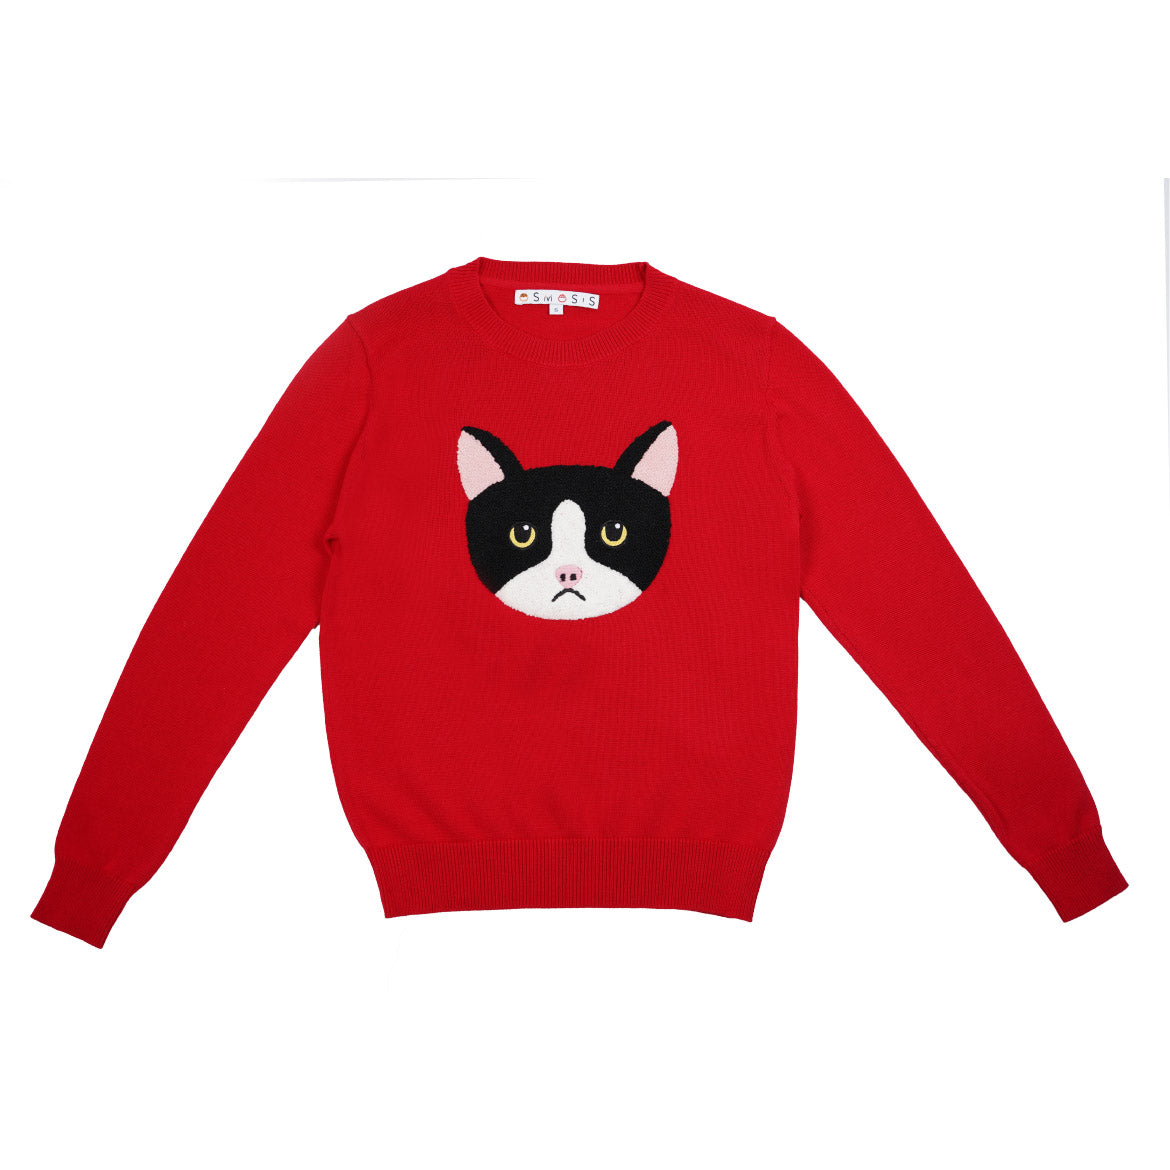 Felix cotton sweater